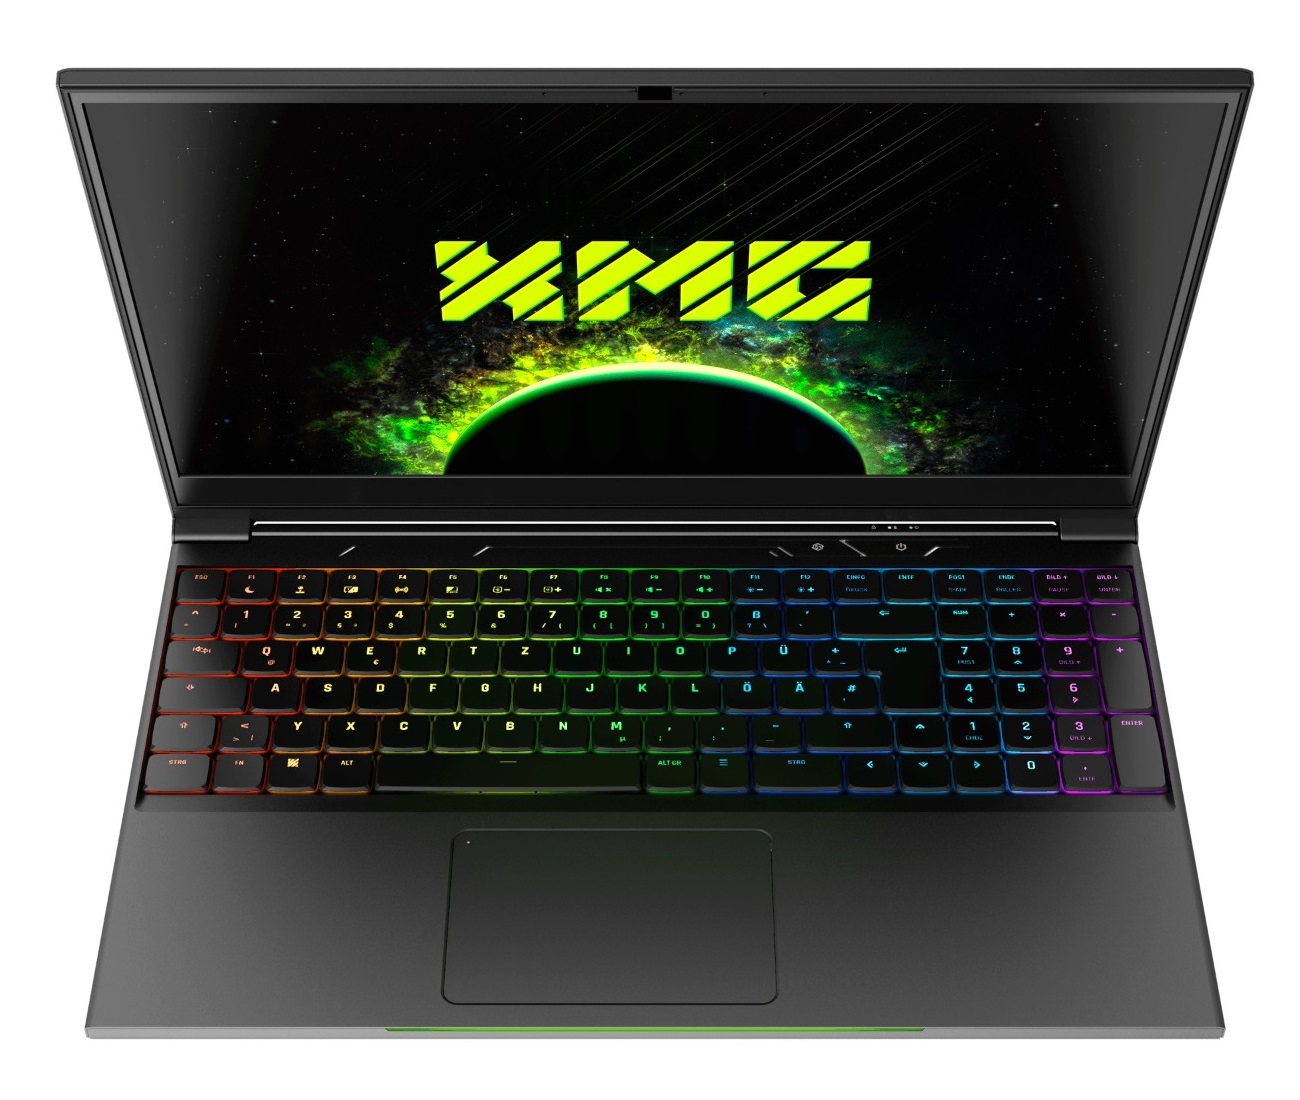 Schenker XMG Neo 15 (Tongfang GK5CQ7Z) Laptop Review: A gaming laptop ...